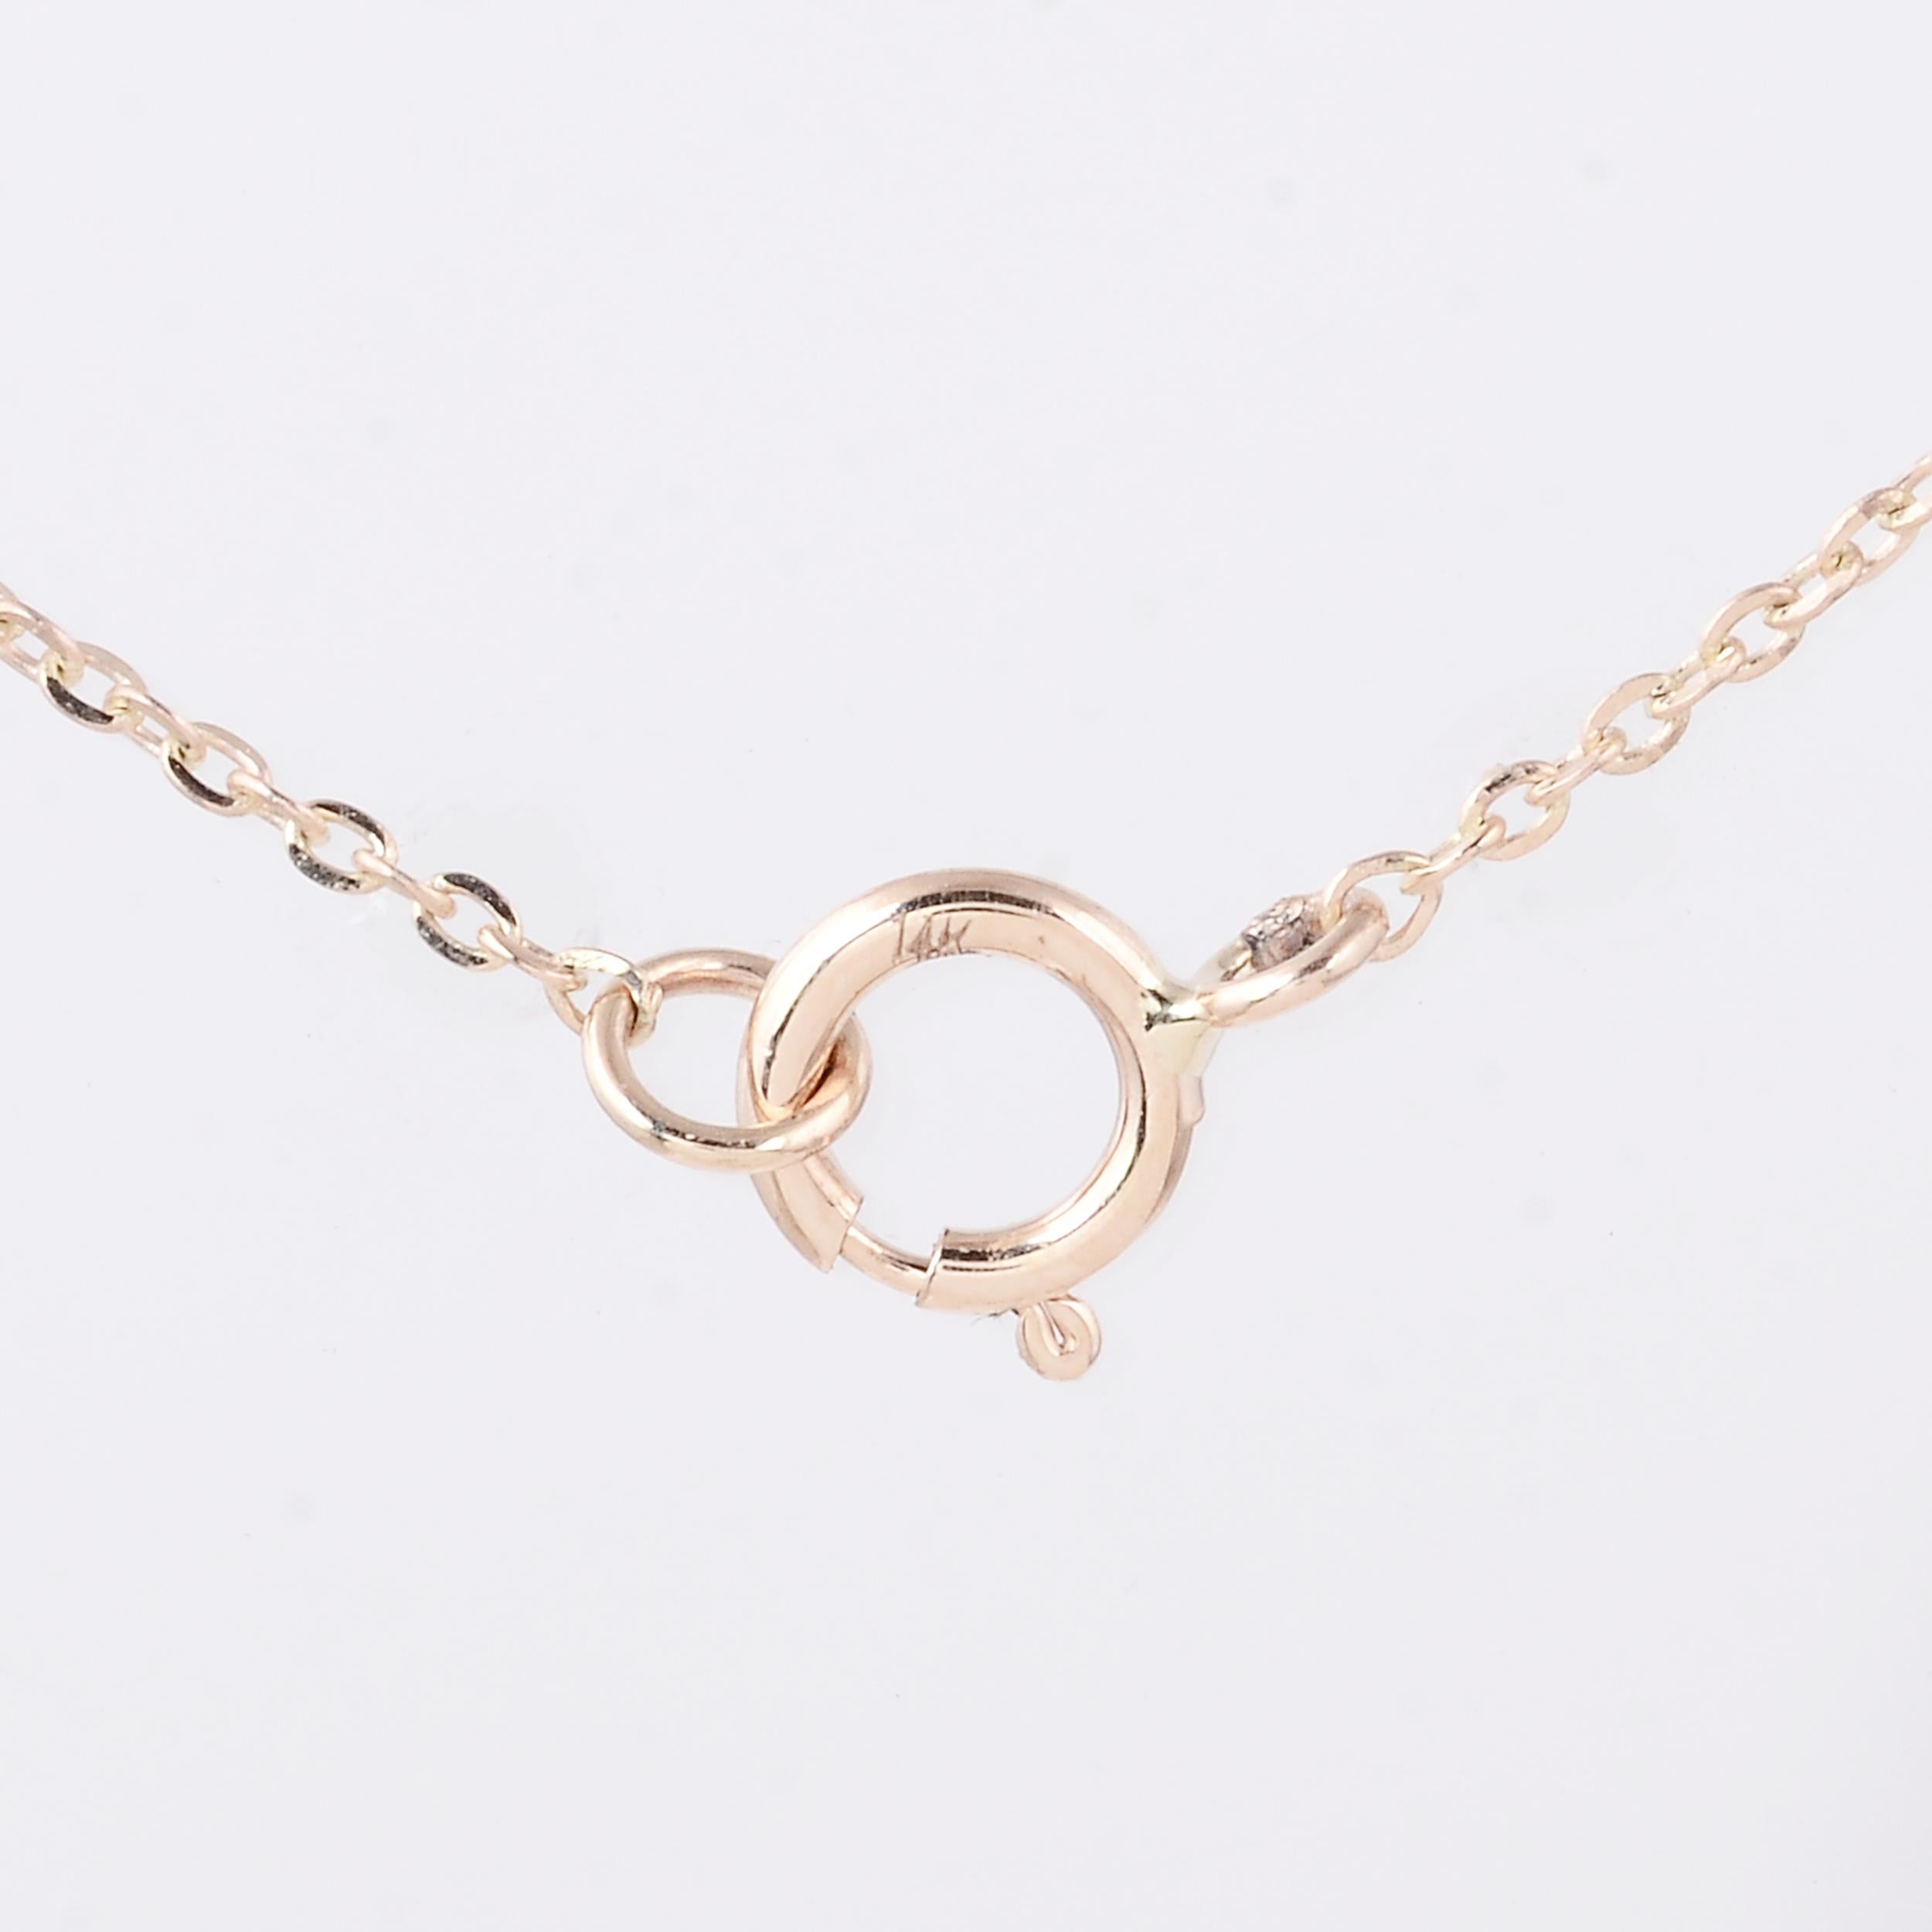 Women's 14K Tourmaline Pendant Necklace - Elegant Jewelry for Unique Style Statement For Sale